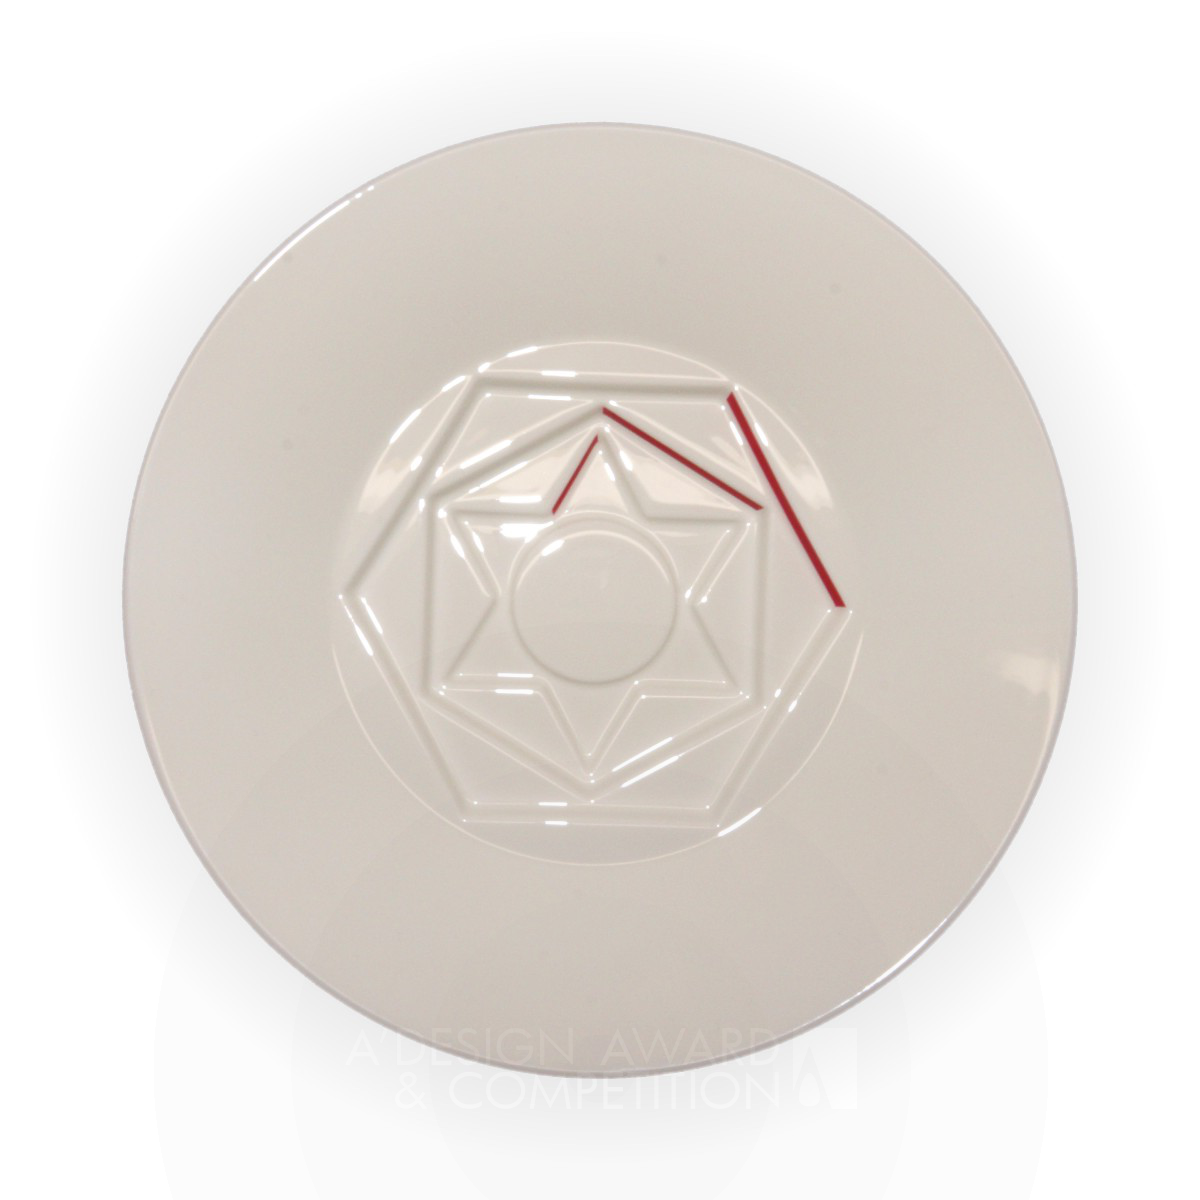 Pythagoras Dish by Chizen Shimoda